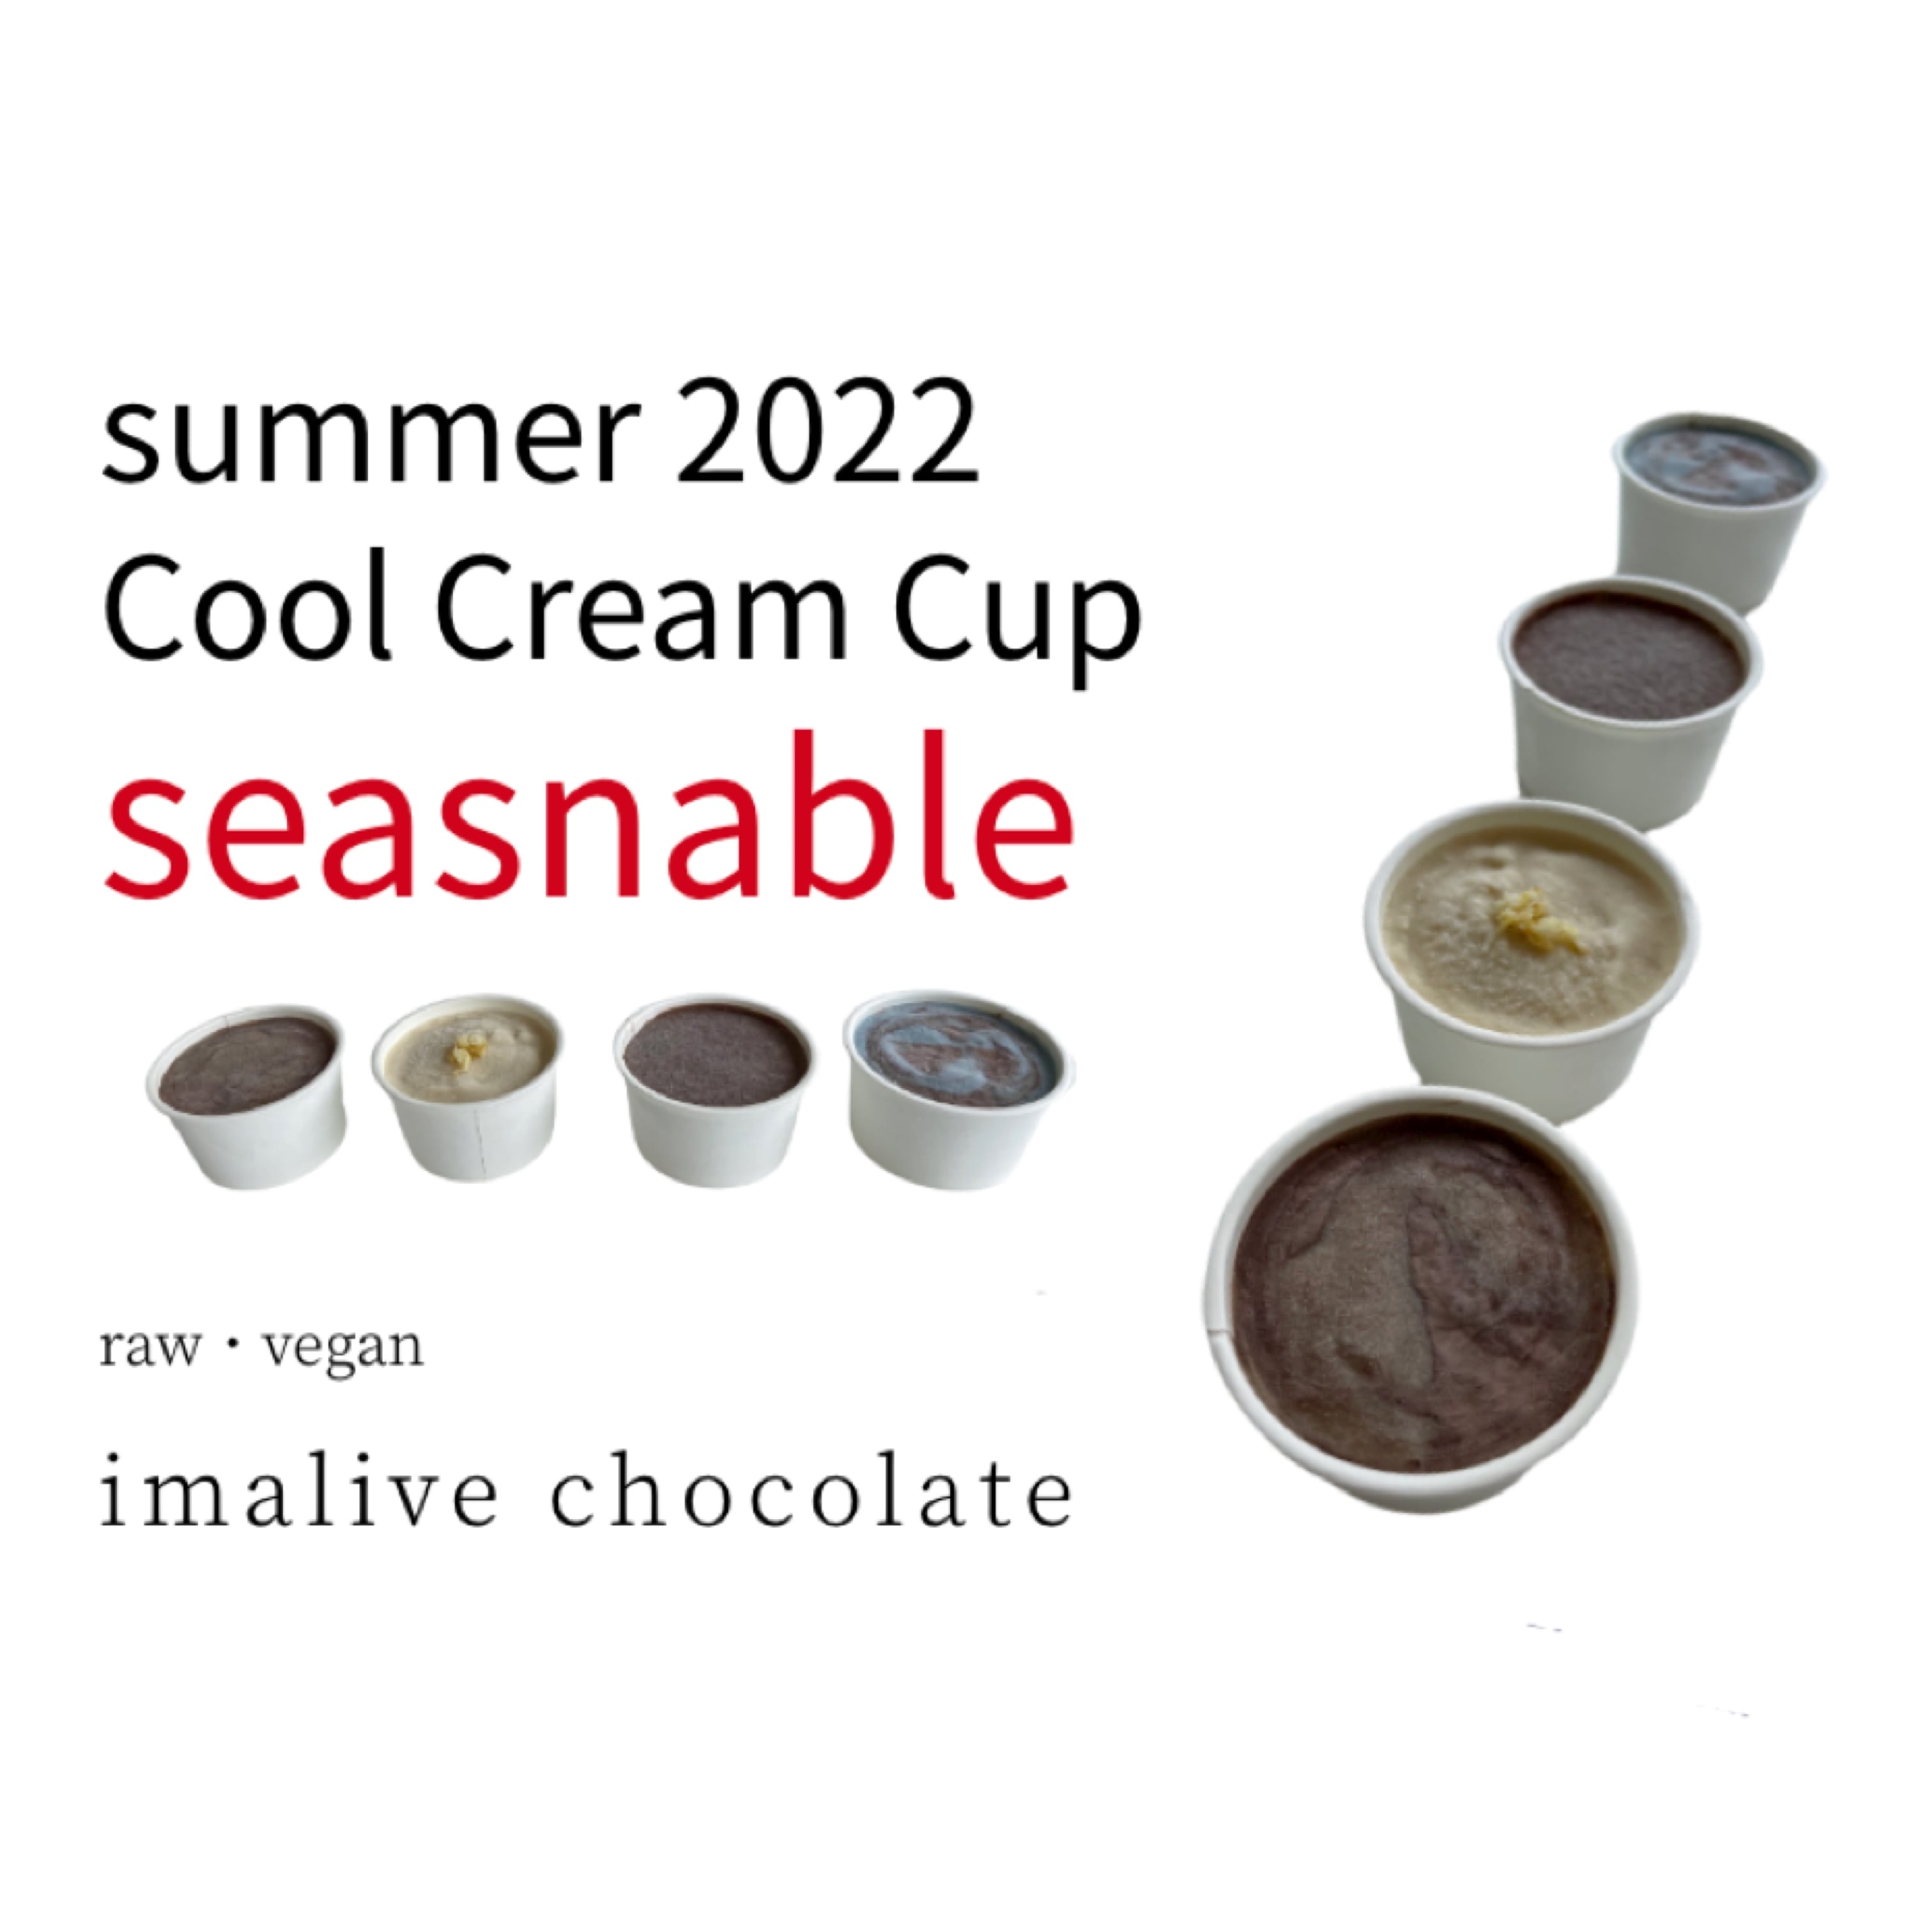 Cool Cream Cup 2022 seasonable